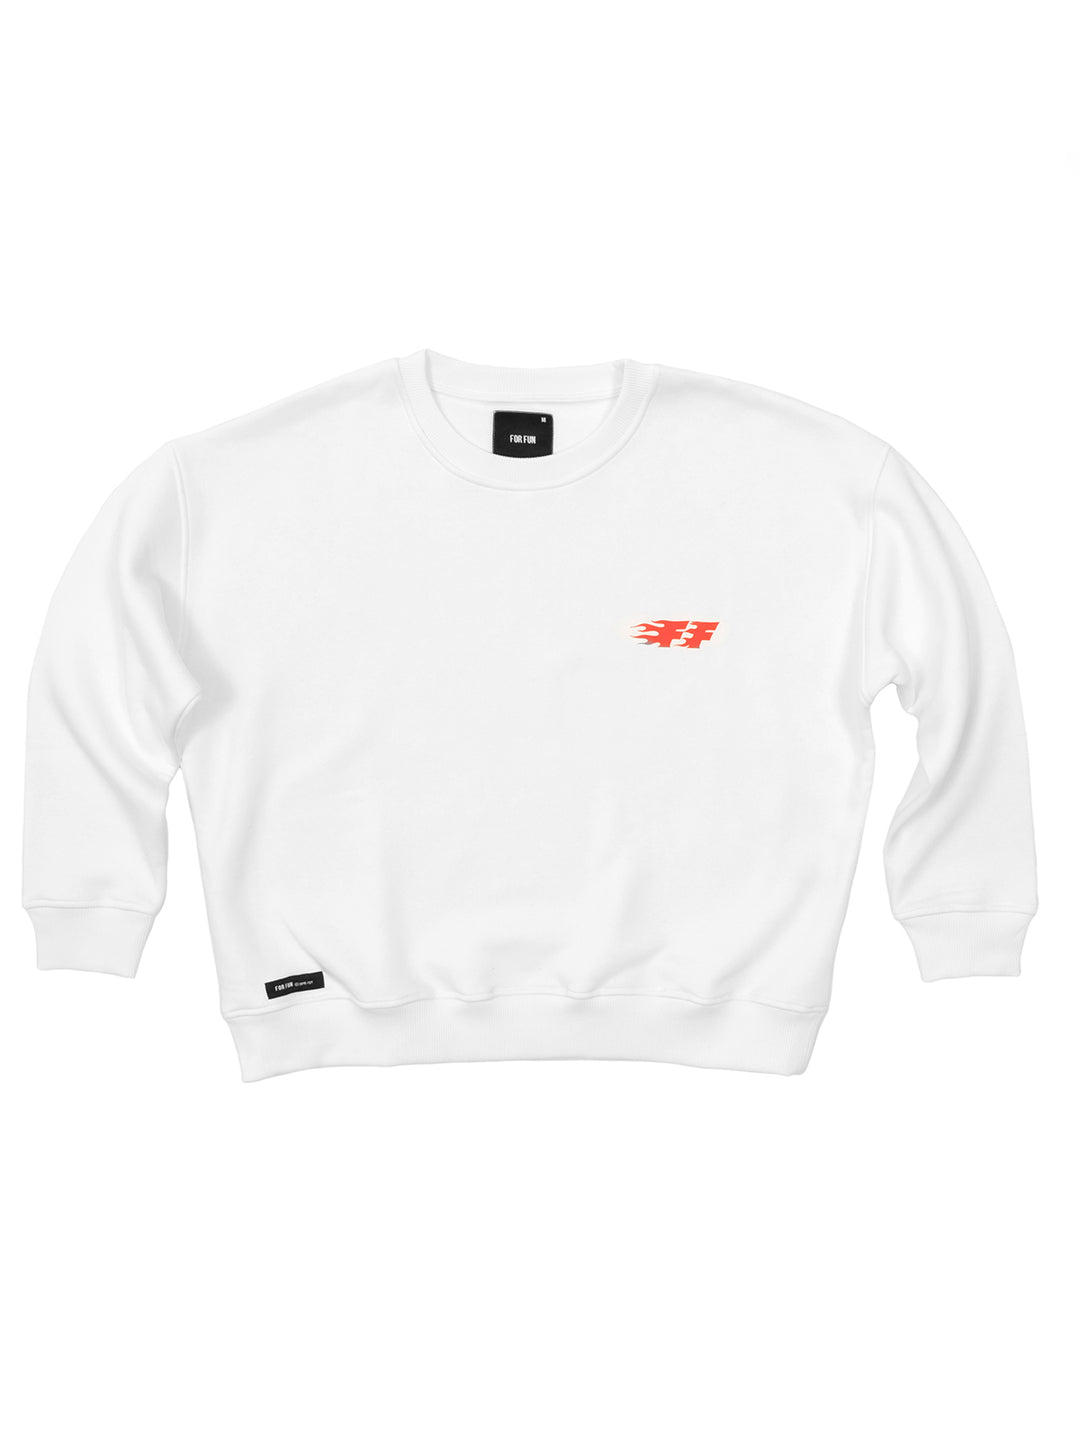 FF Feuerball / Women's Sweatshirt